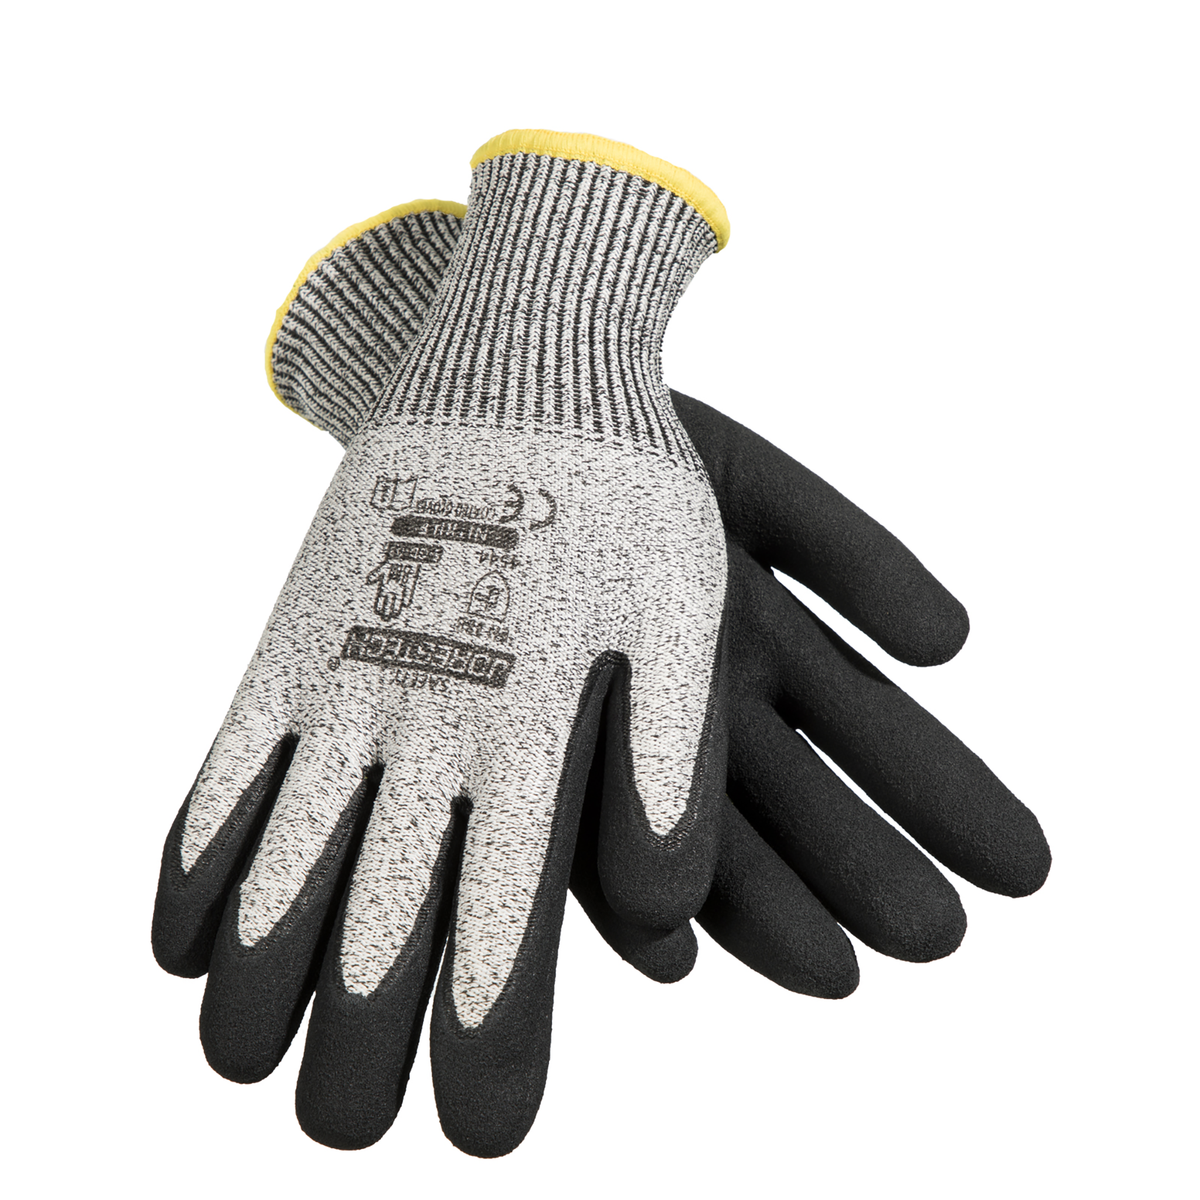 JORESTECH High Visibility Safety Touch Screen Technology Multipurpose Fleece Lined Winter Work Gloves